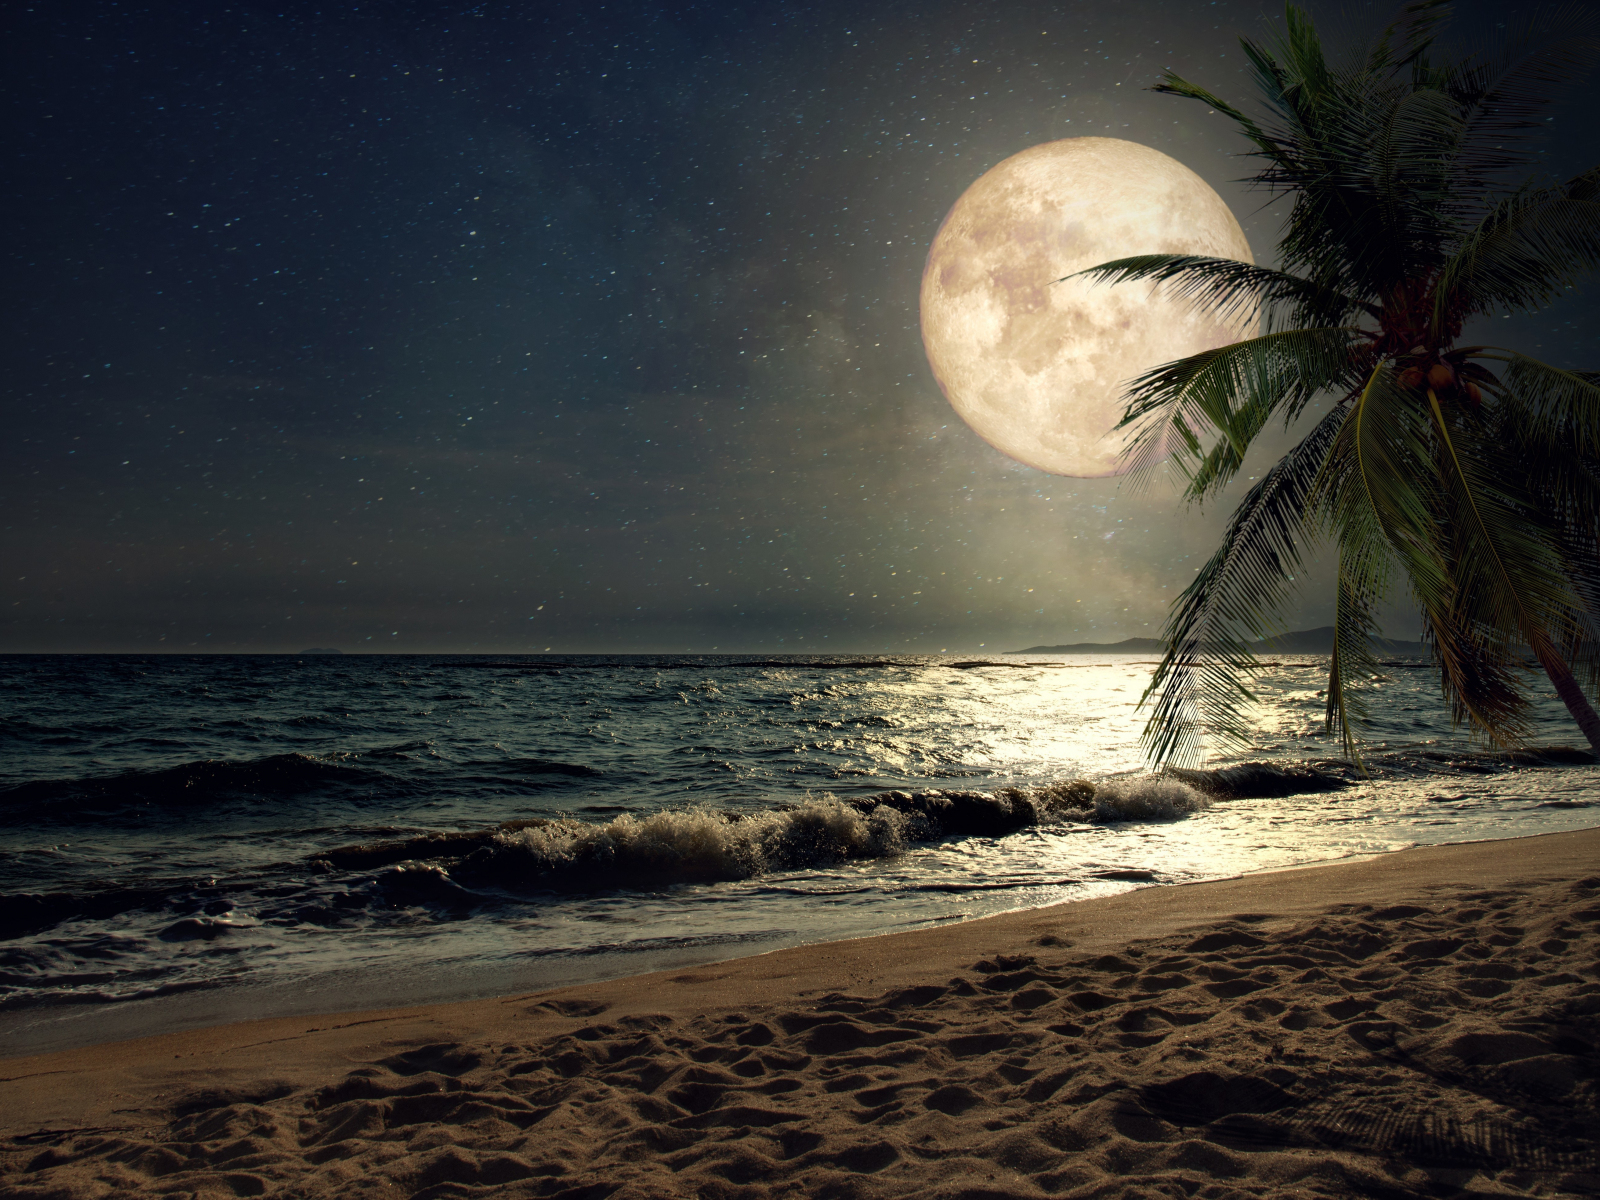 Download wallpaper 1600x1200 beach, sand, night's moon, palm tree